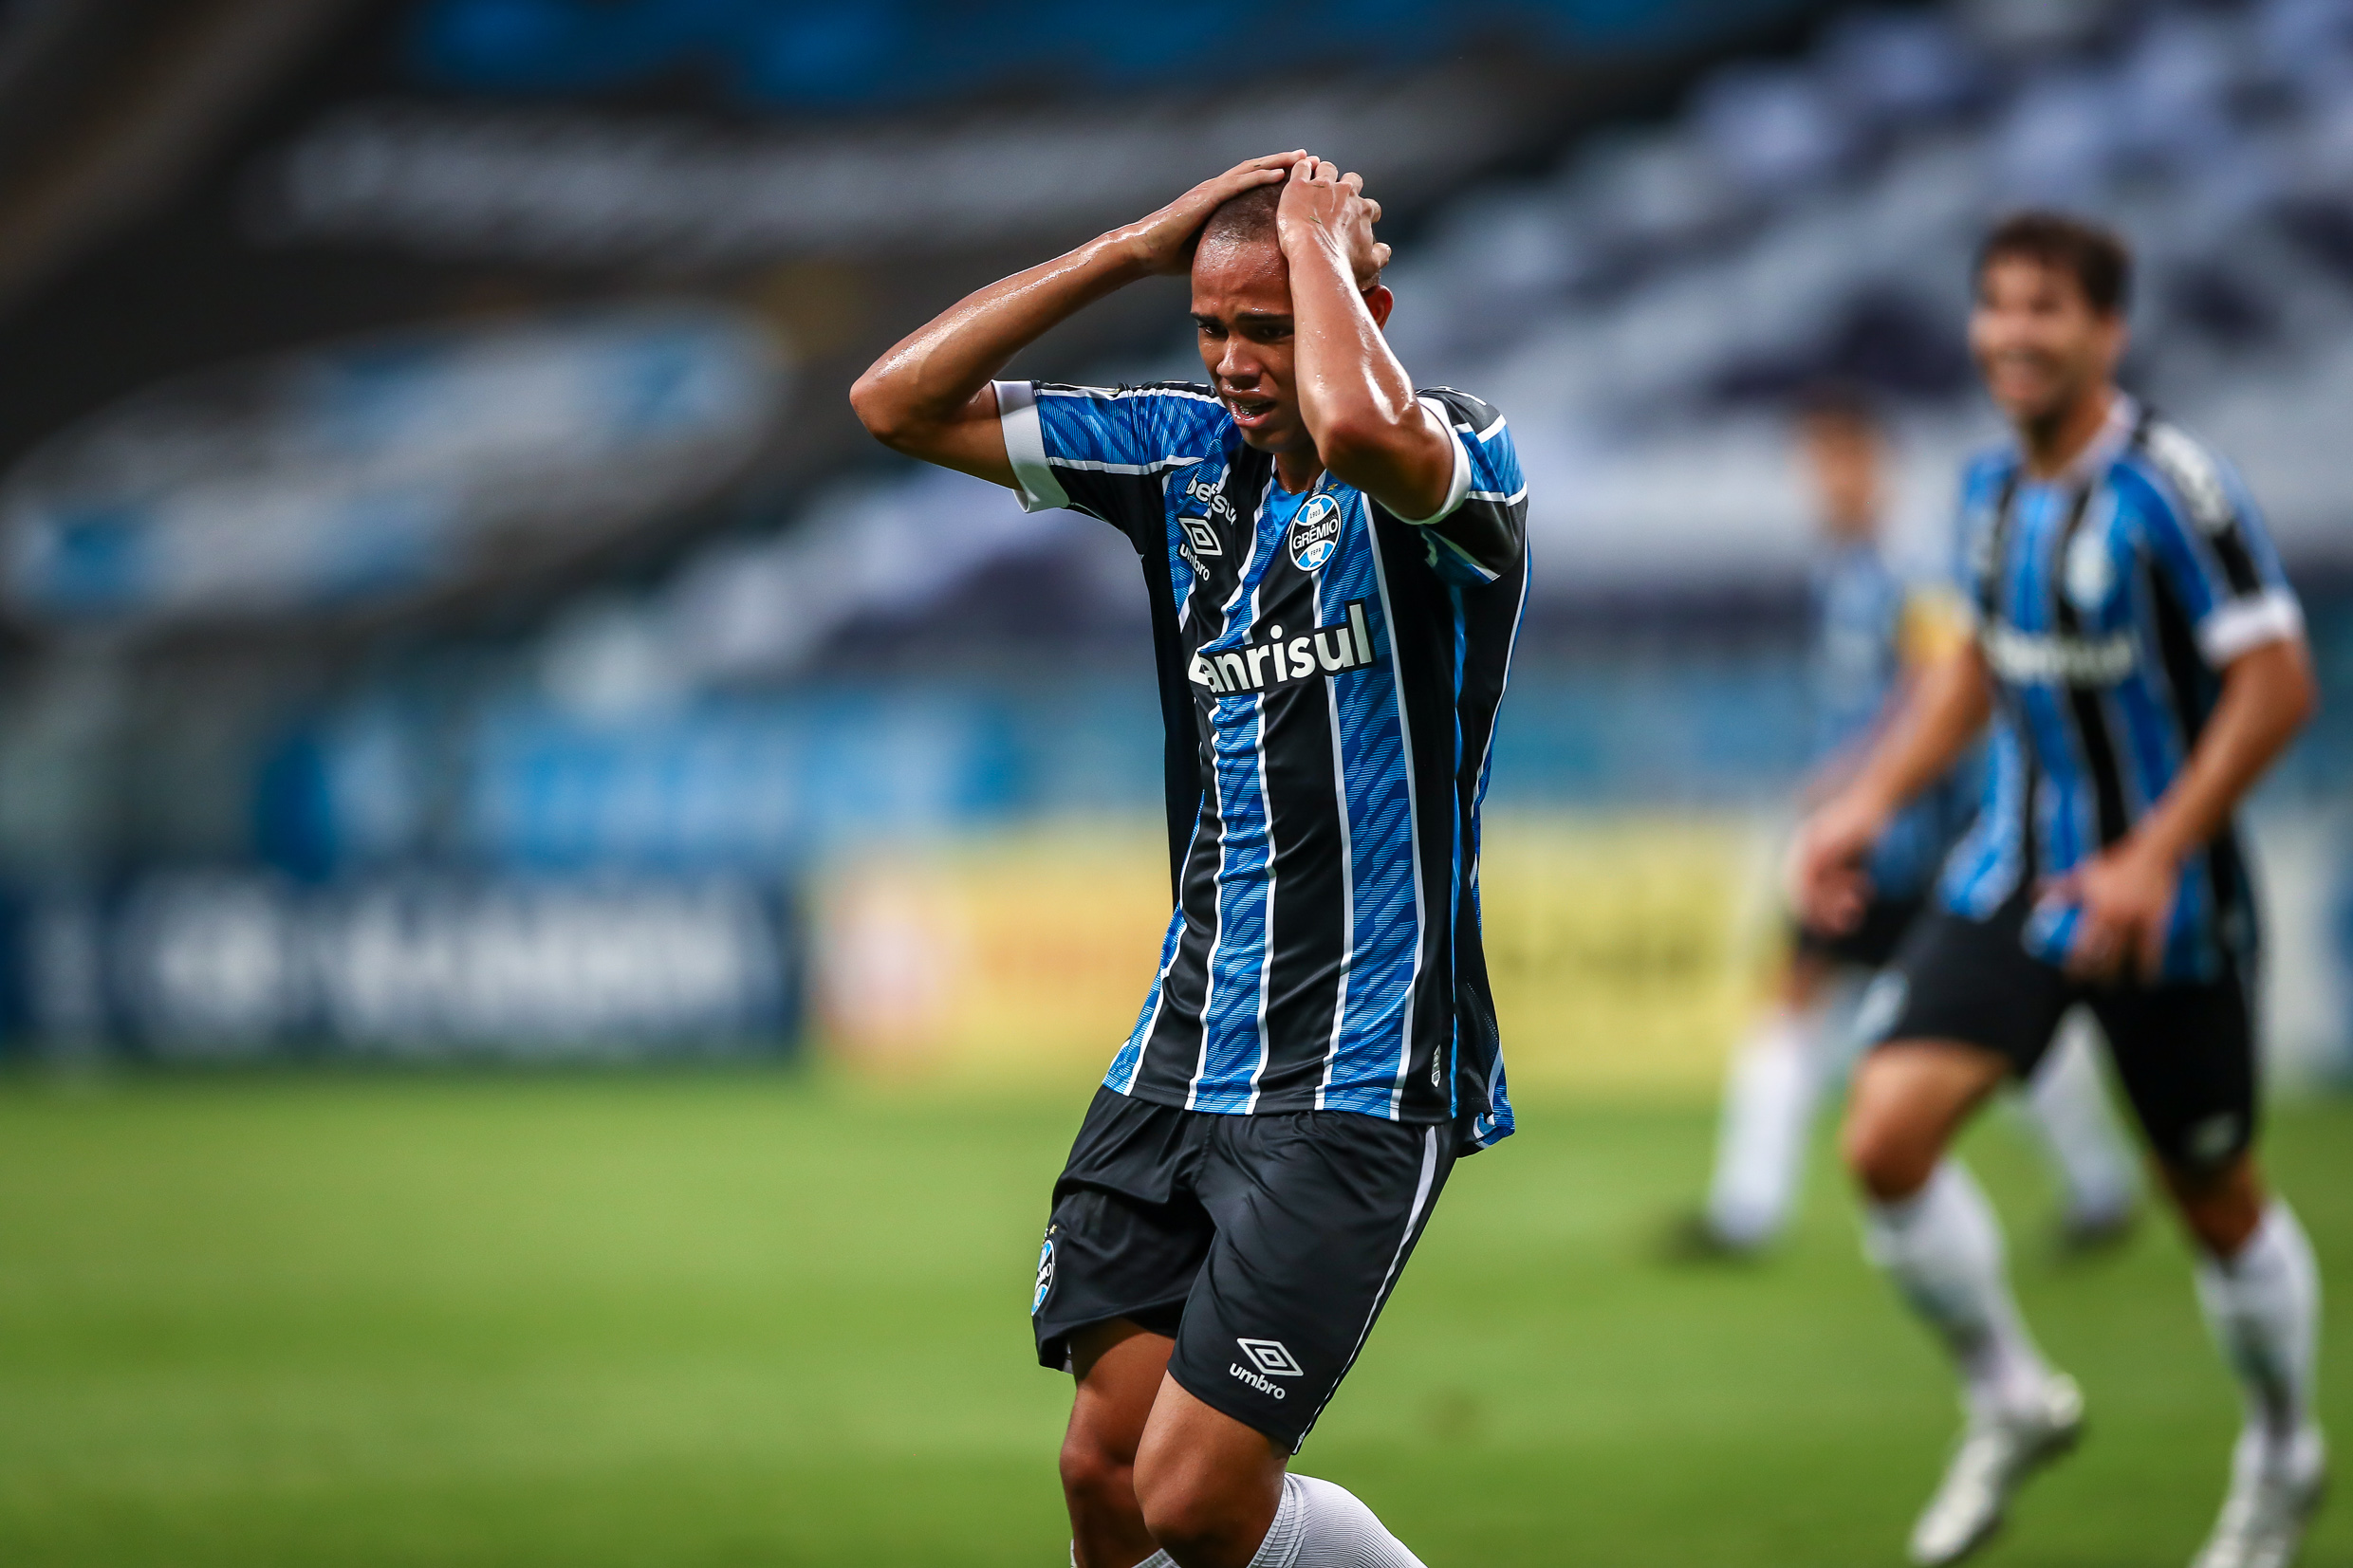 Vanderson in action for Gremio. (Photo: Lucas Uebel / Grêmio FBPA)